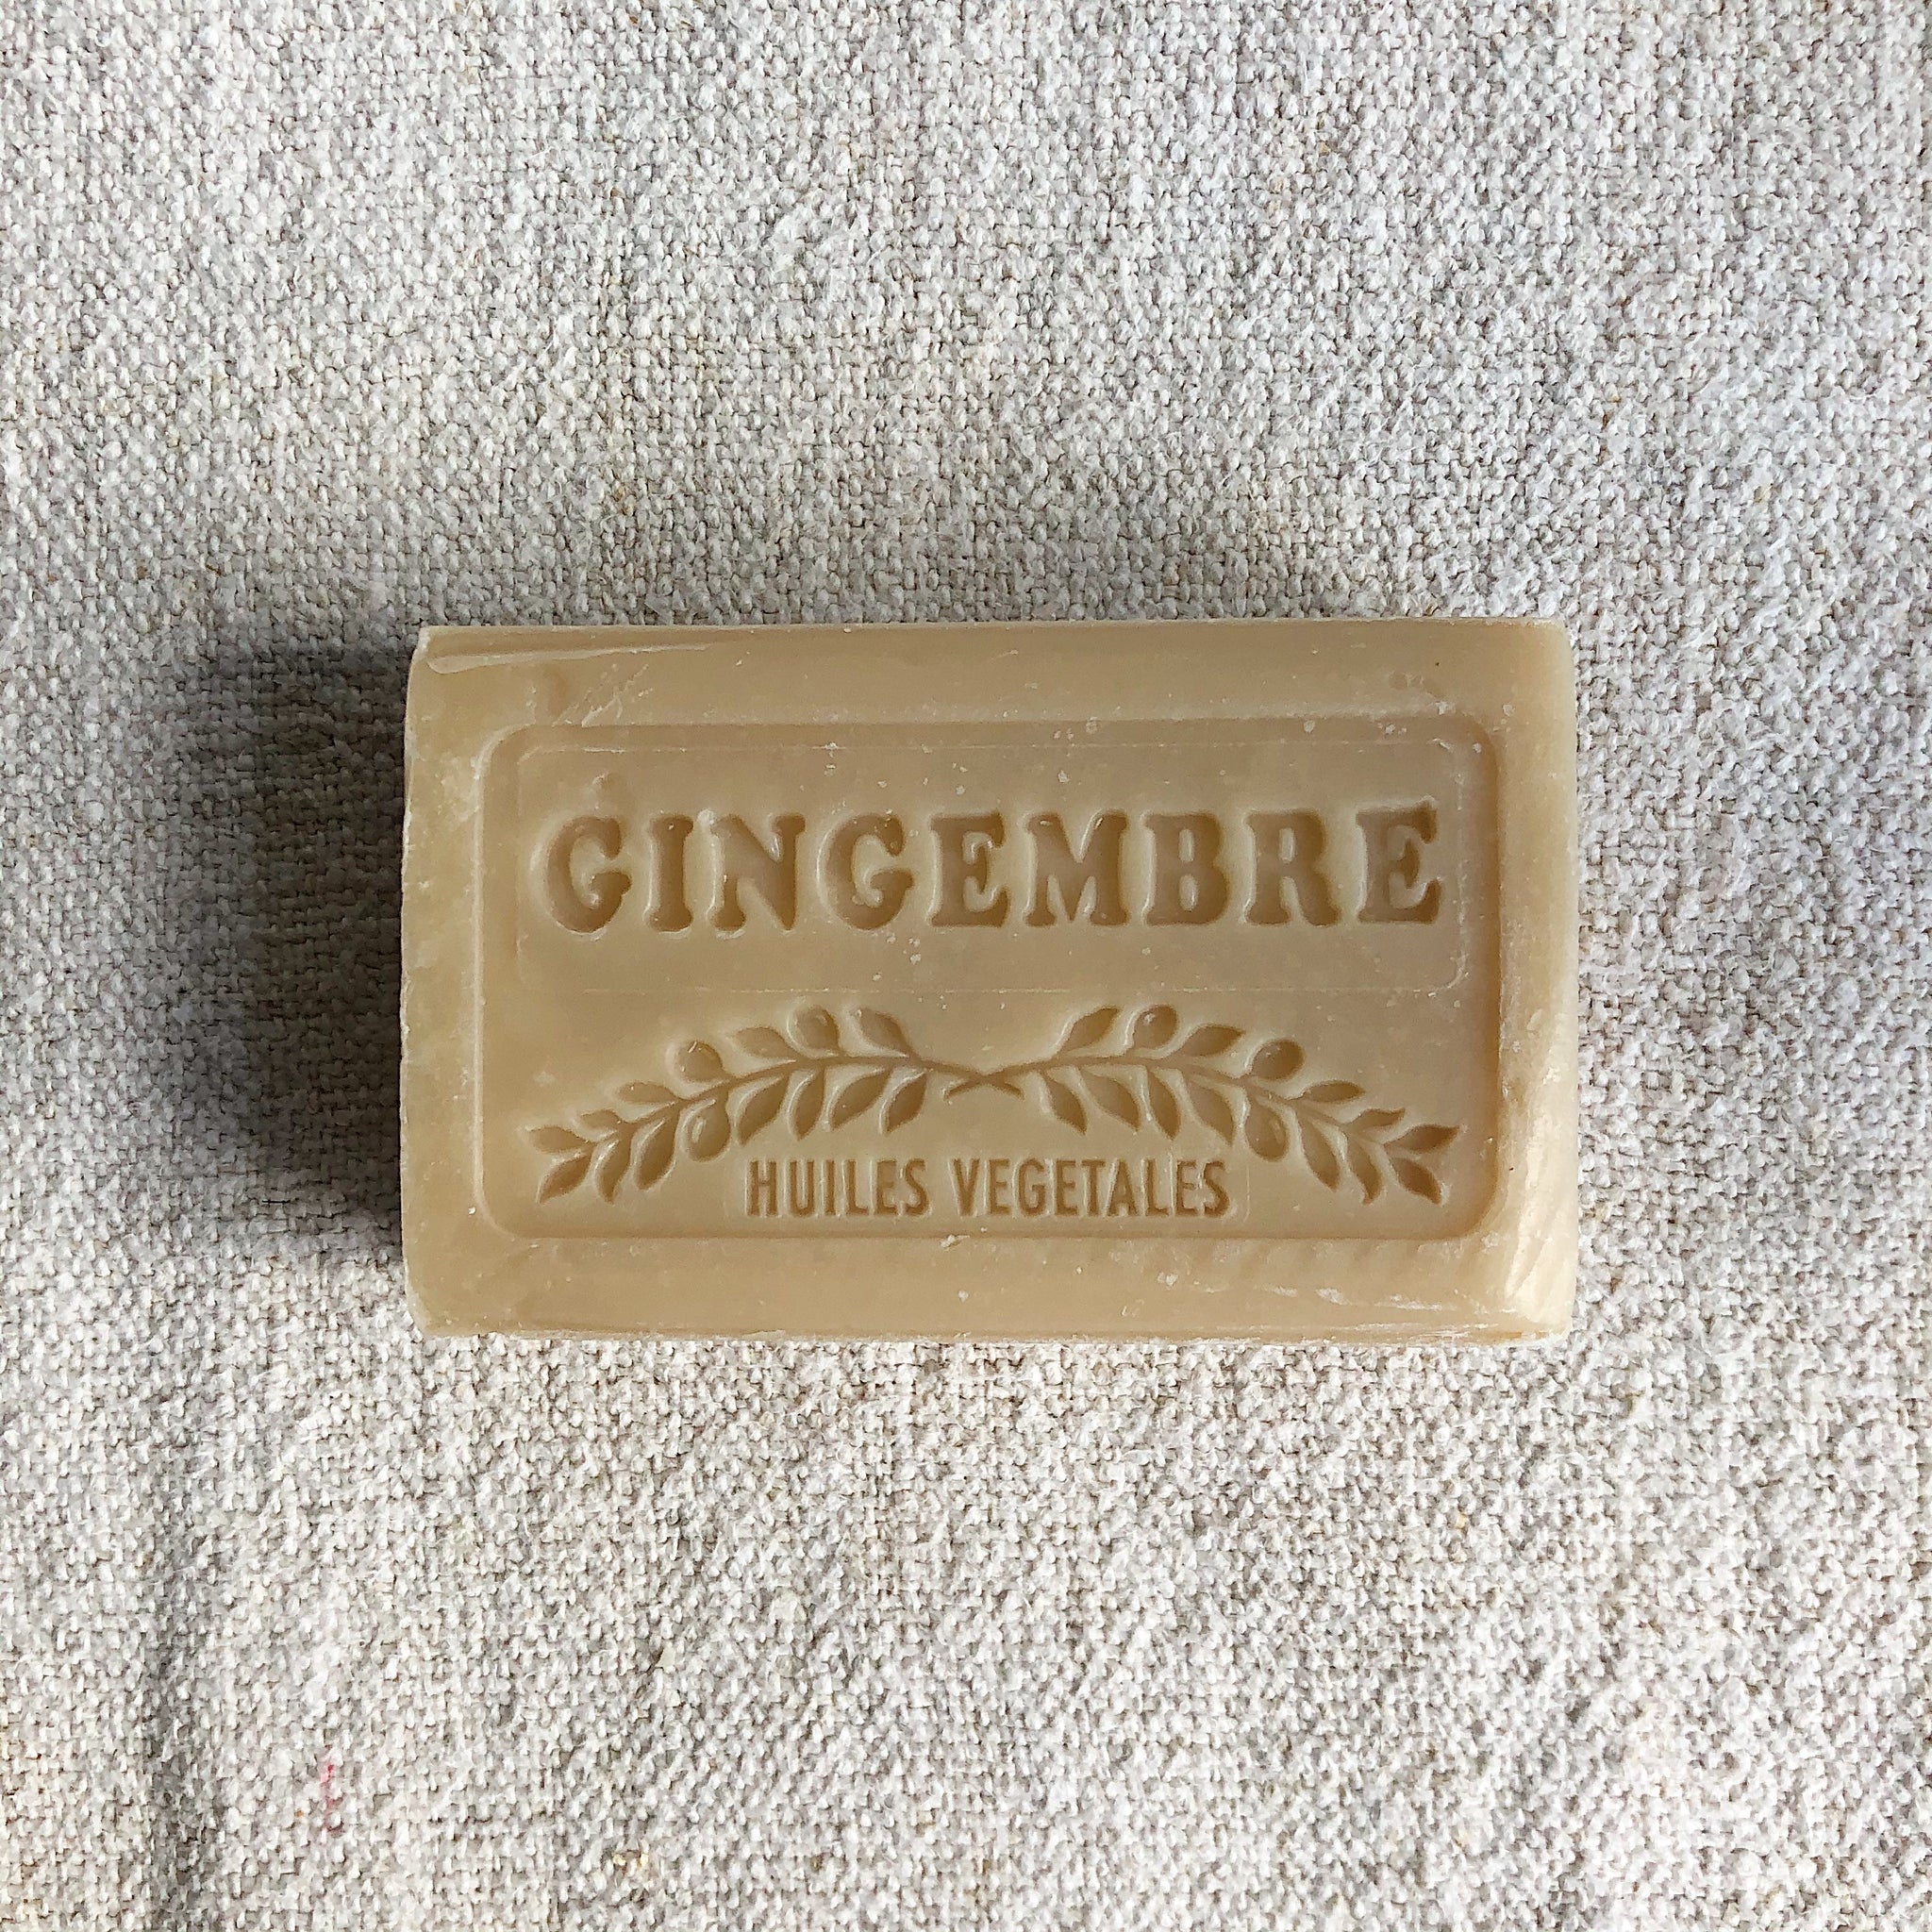 Marseilles Ginger Soap